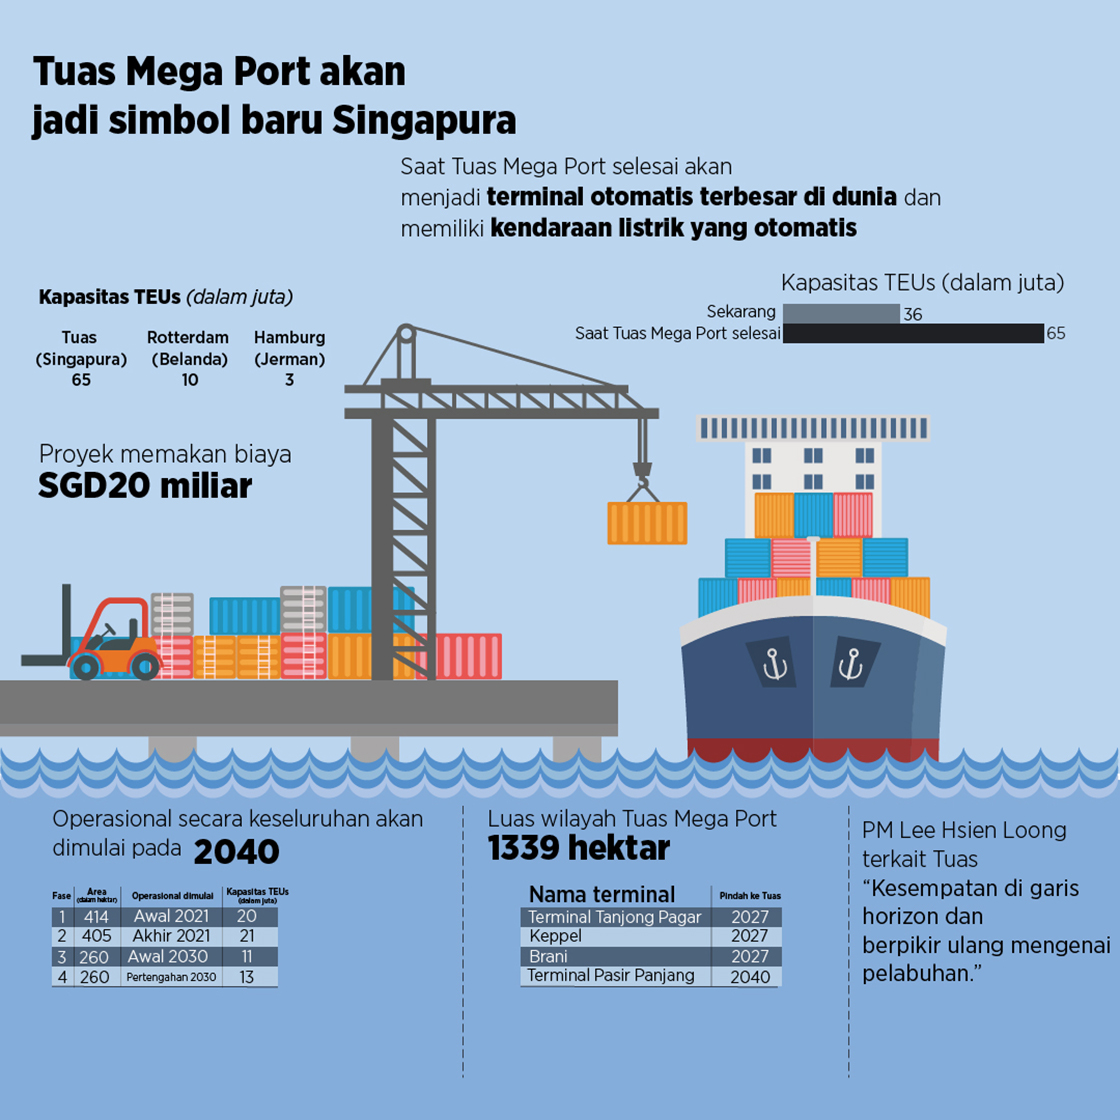 Tuas Mega Port akan jadi simbol baru Singapura 